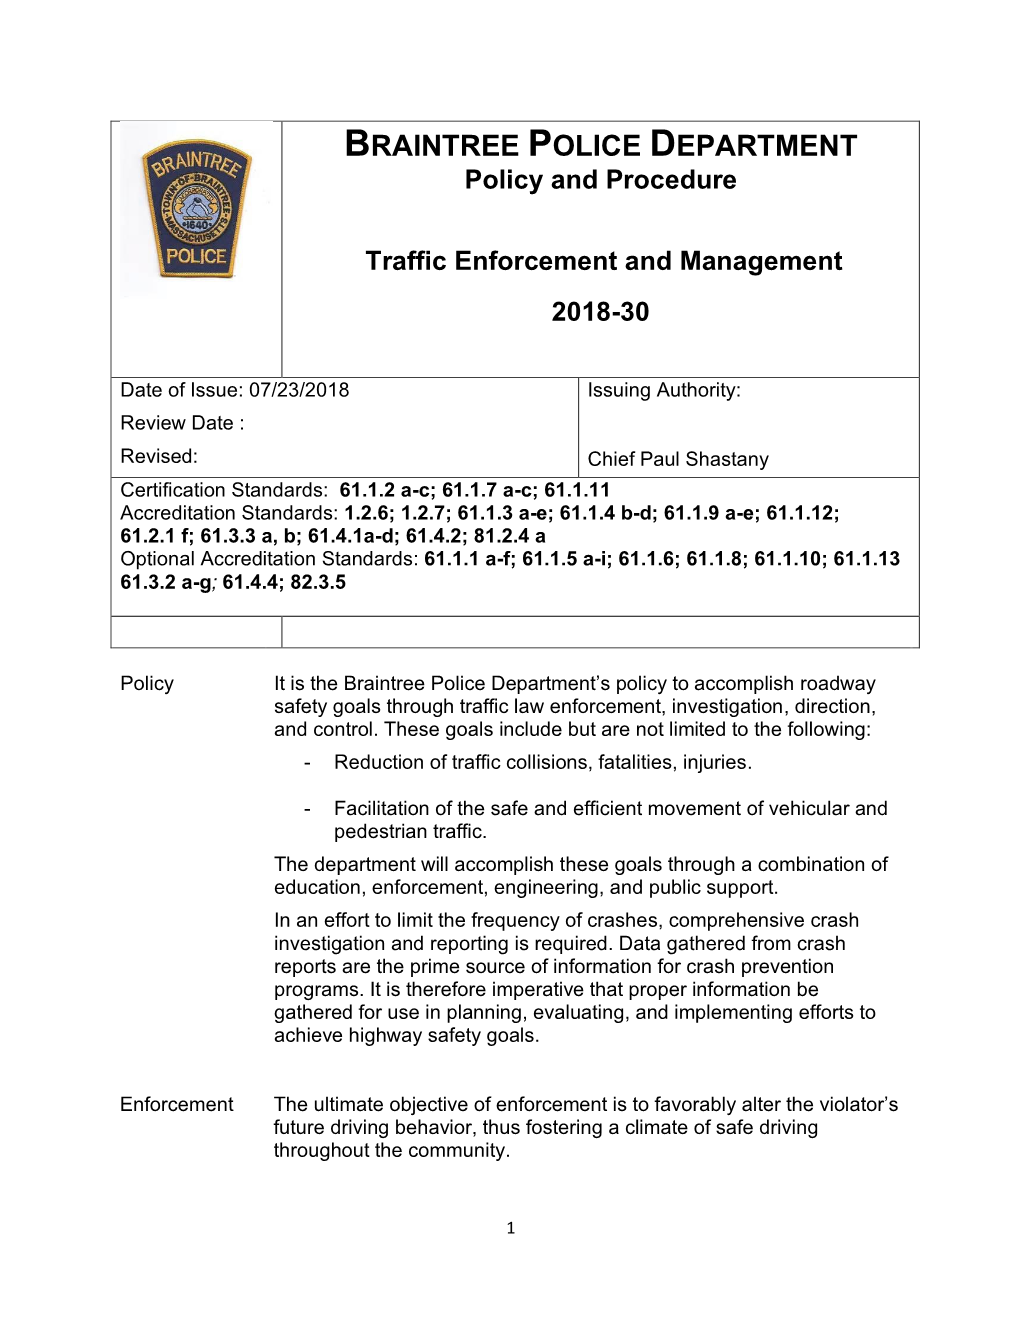 Traffic Enforcement and Management